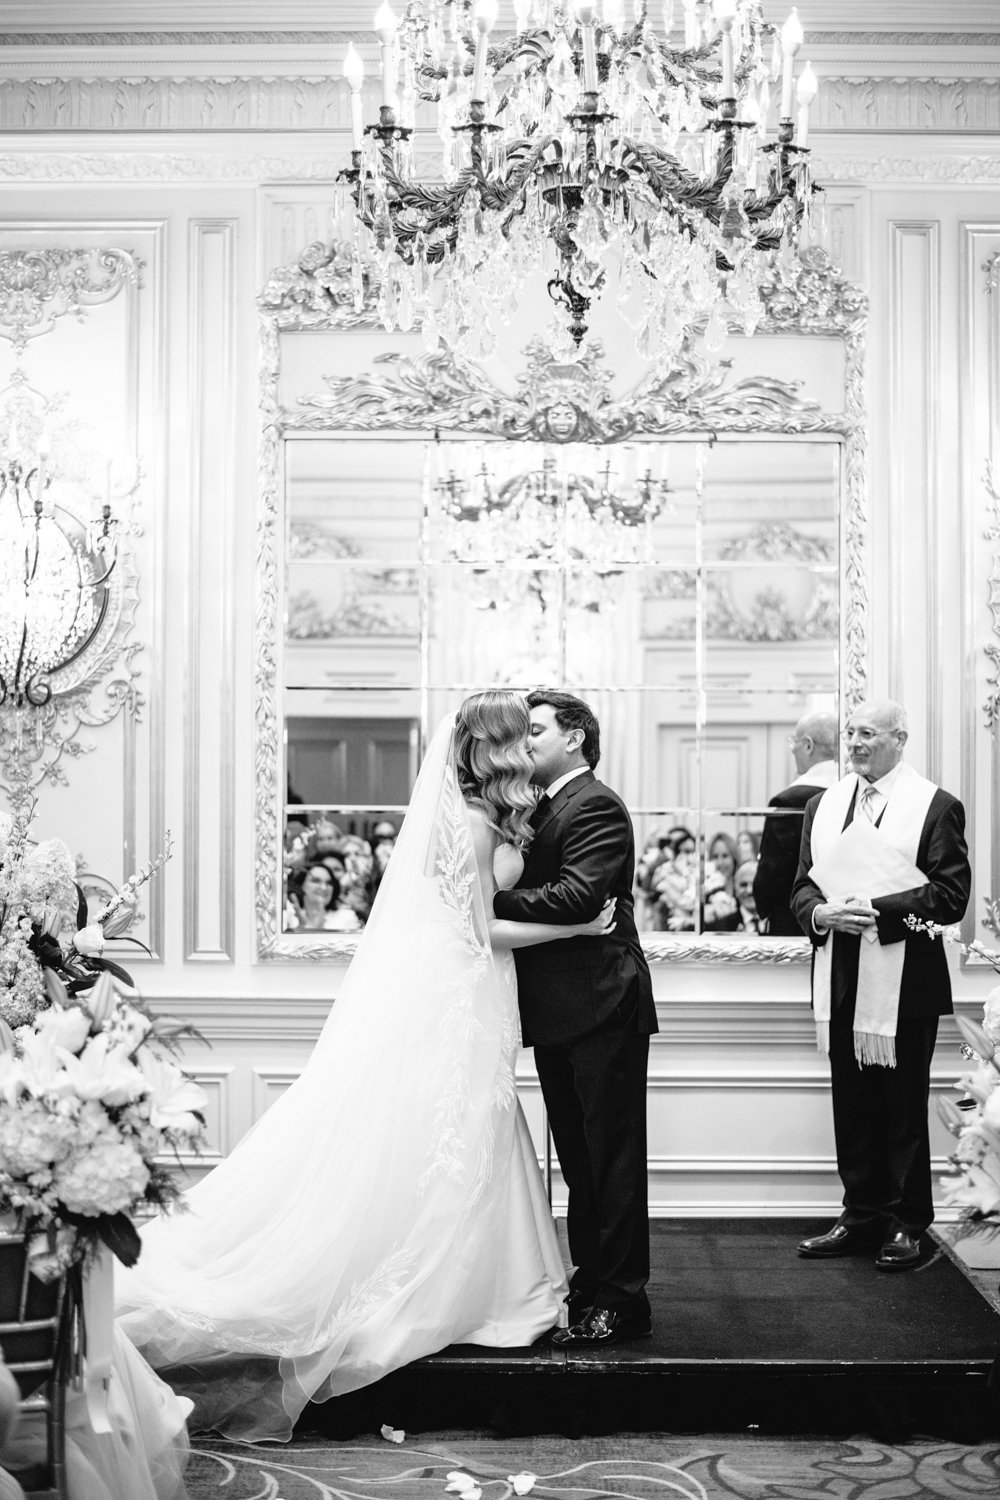 Bride and groom kiss at the altar below a grand chandelier in the St. Regis in Manhattan.

Manhattan Luxury Wedding. New York Luxury Wedding Photographer. Wedding in Manhattan. NYC Luxury Wedding.